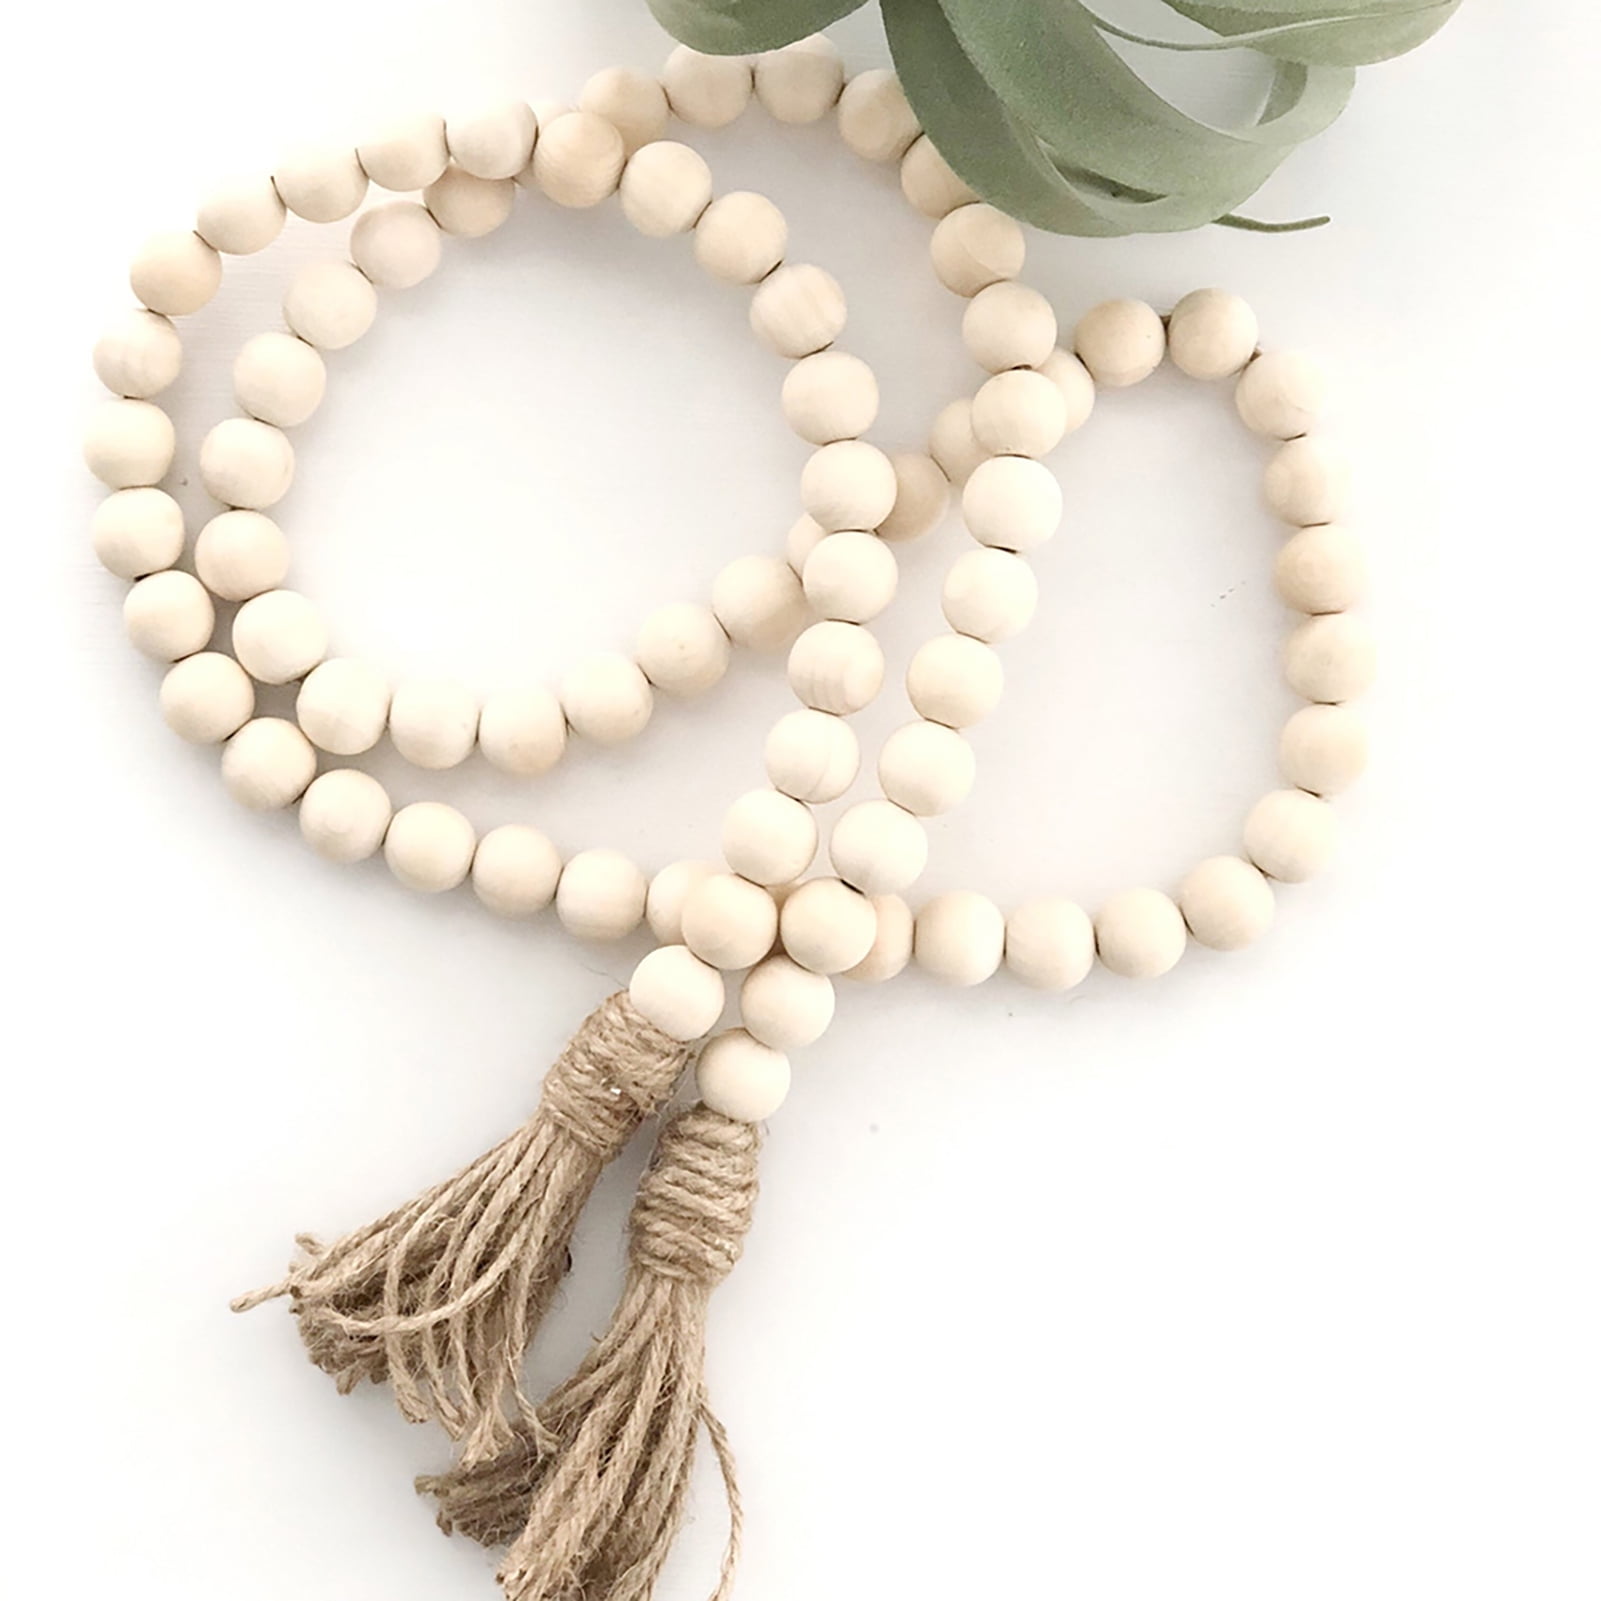 Vintage Wooden Beads Linen Rope Tassels Ornament Pendant Wedding Party Decor 